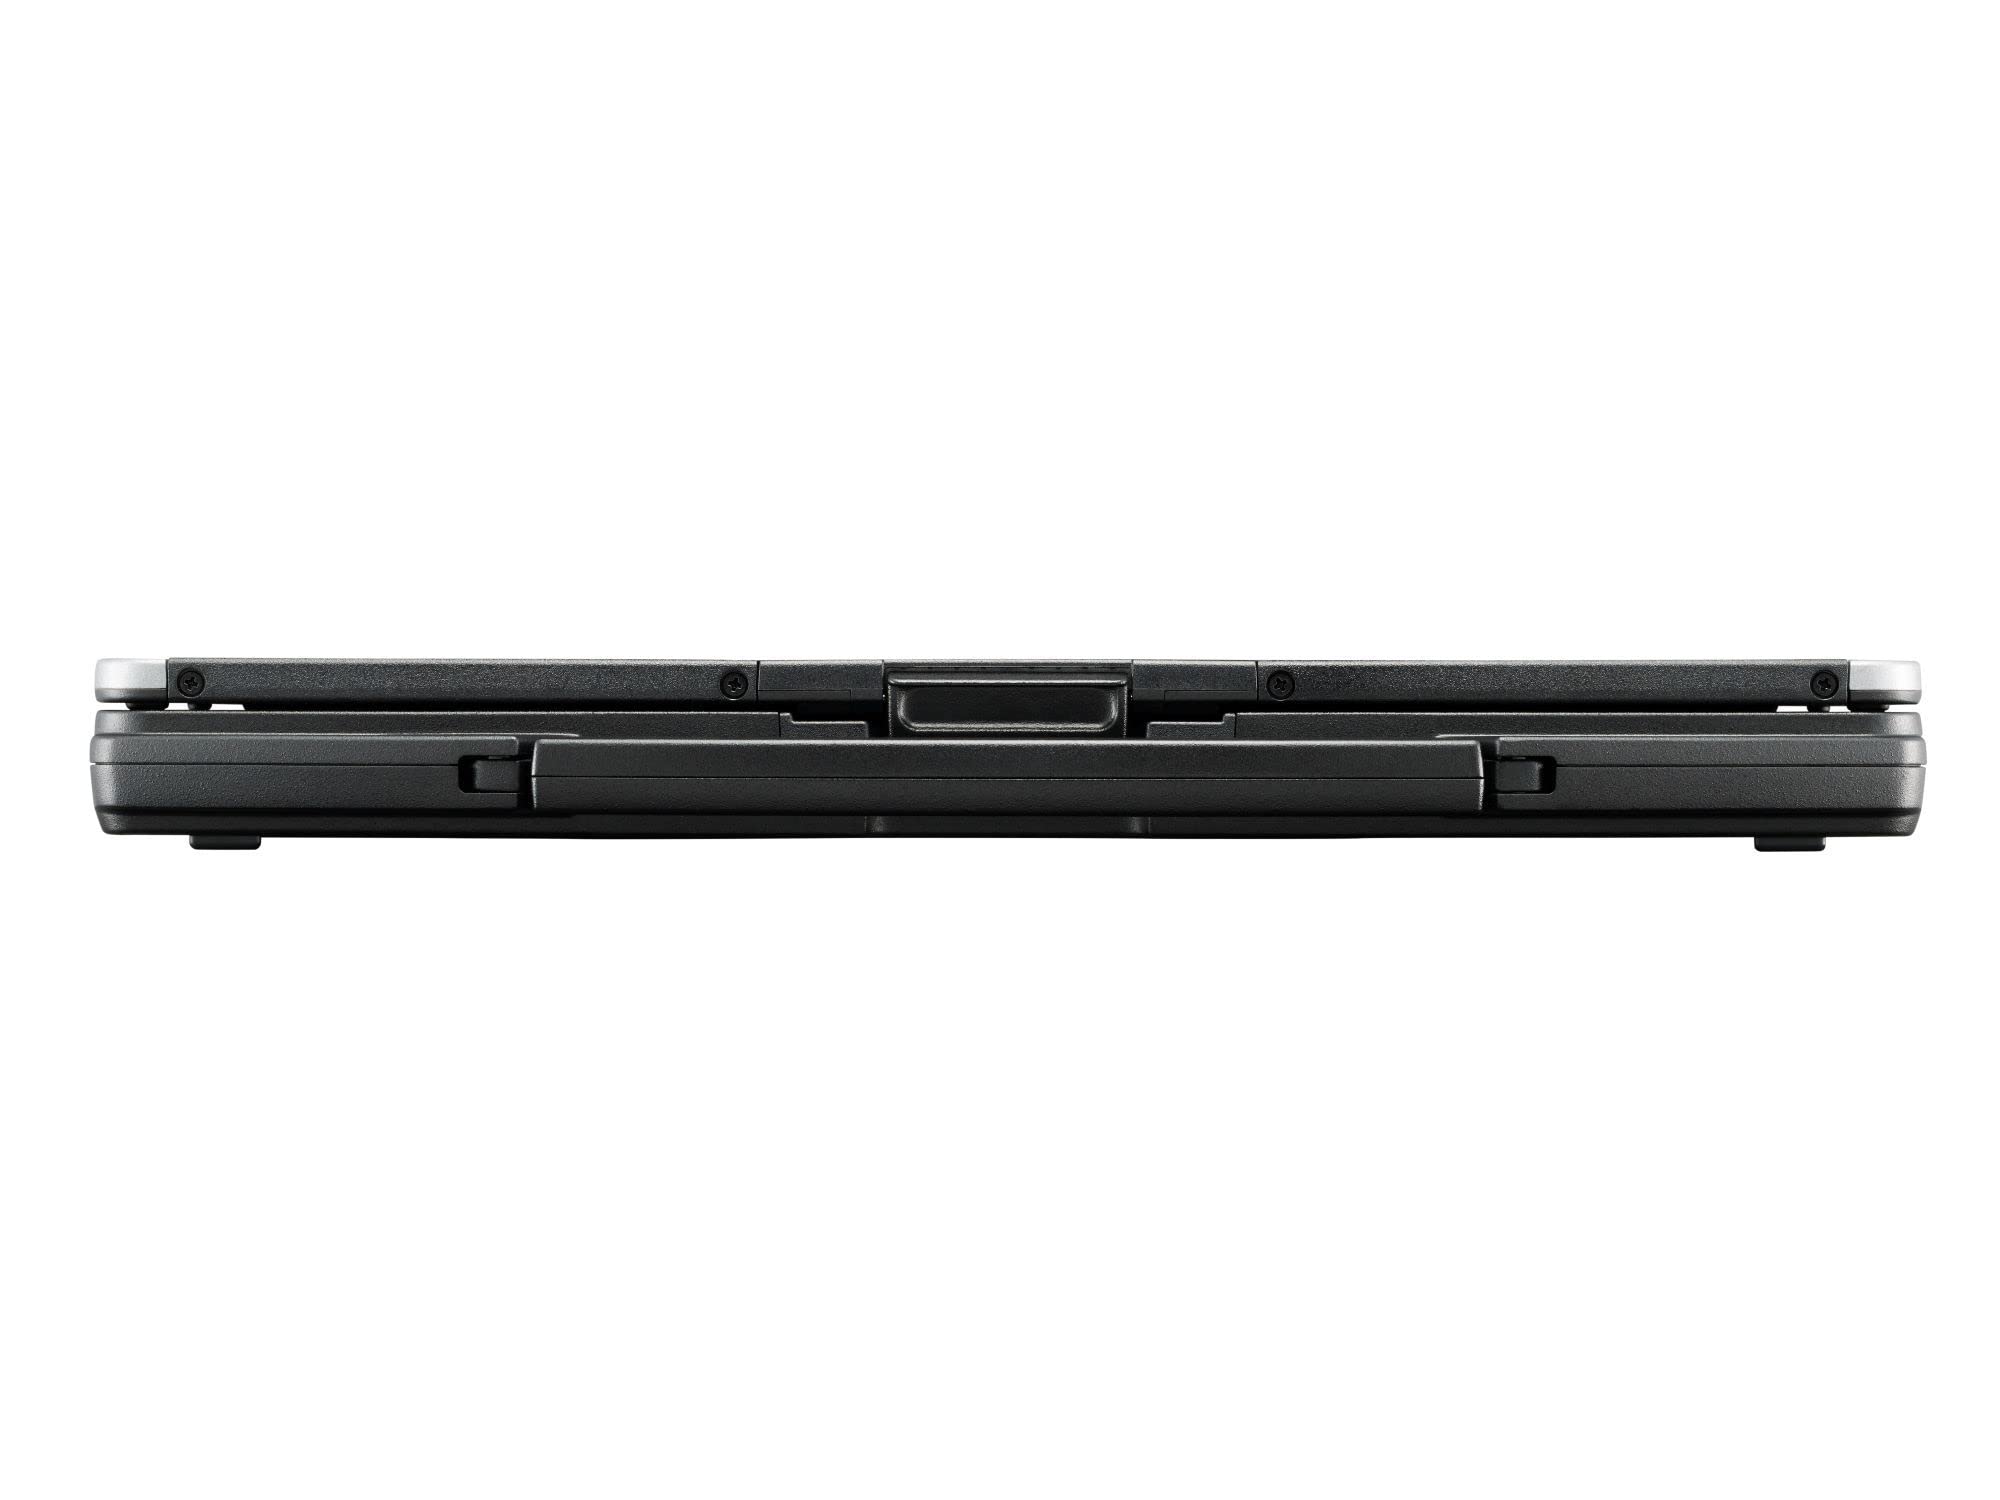 Panasonic Toughbook FZ-55 i7, Touch, 4G LTE, dGPS, FZ-55CA60CVM